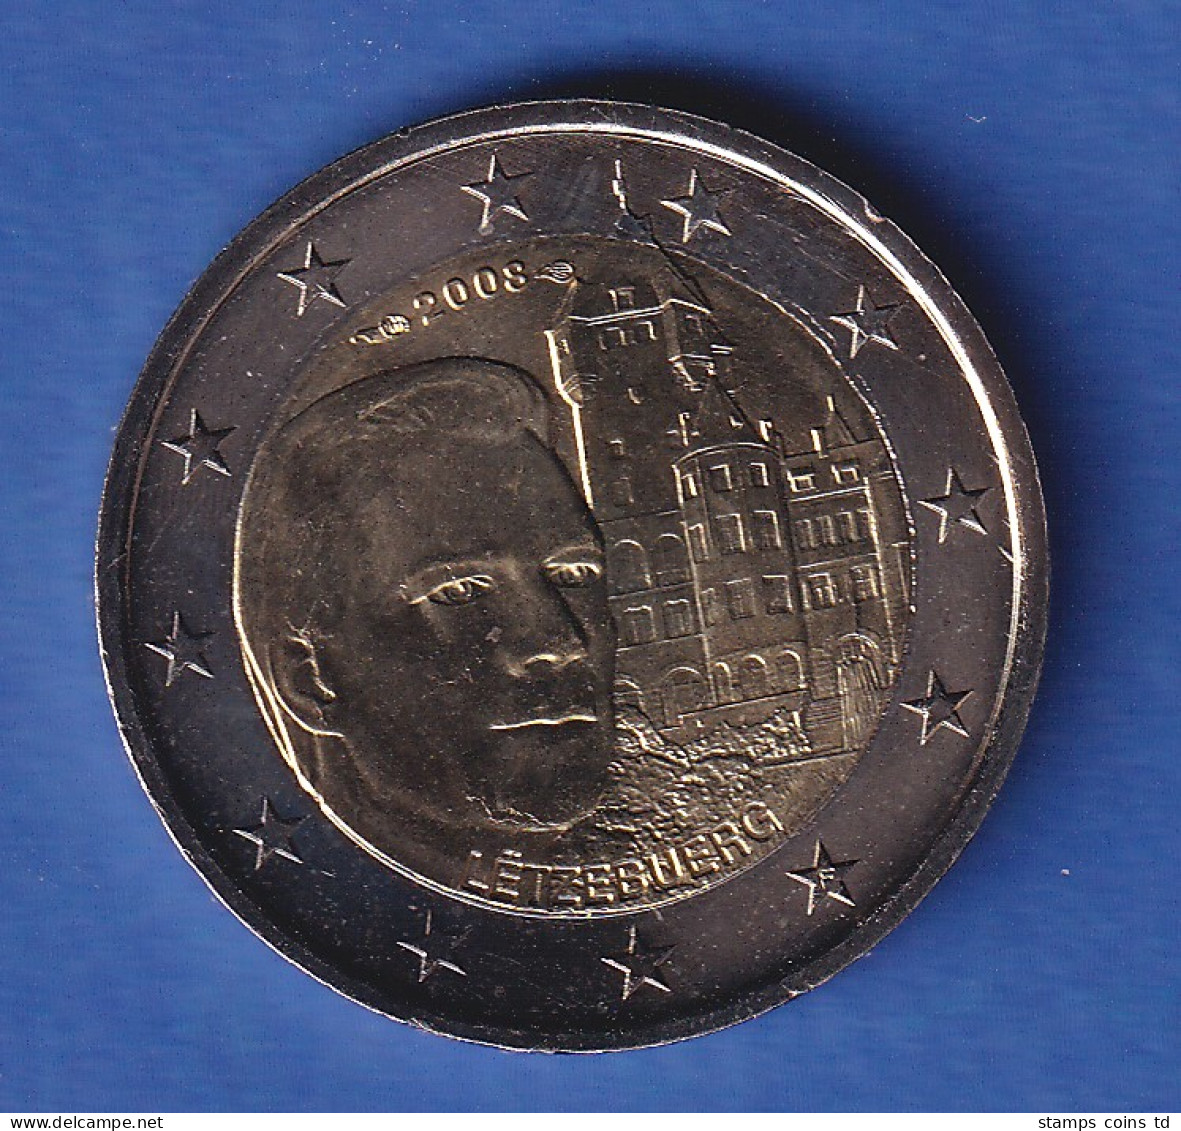 Luxemburg 2008 2-Euro-Sondermünze Großherzog Henri Bankfr. Unzirk. - Lussemburgo